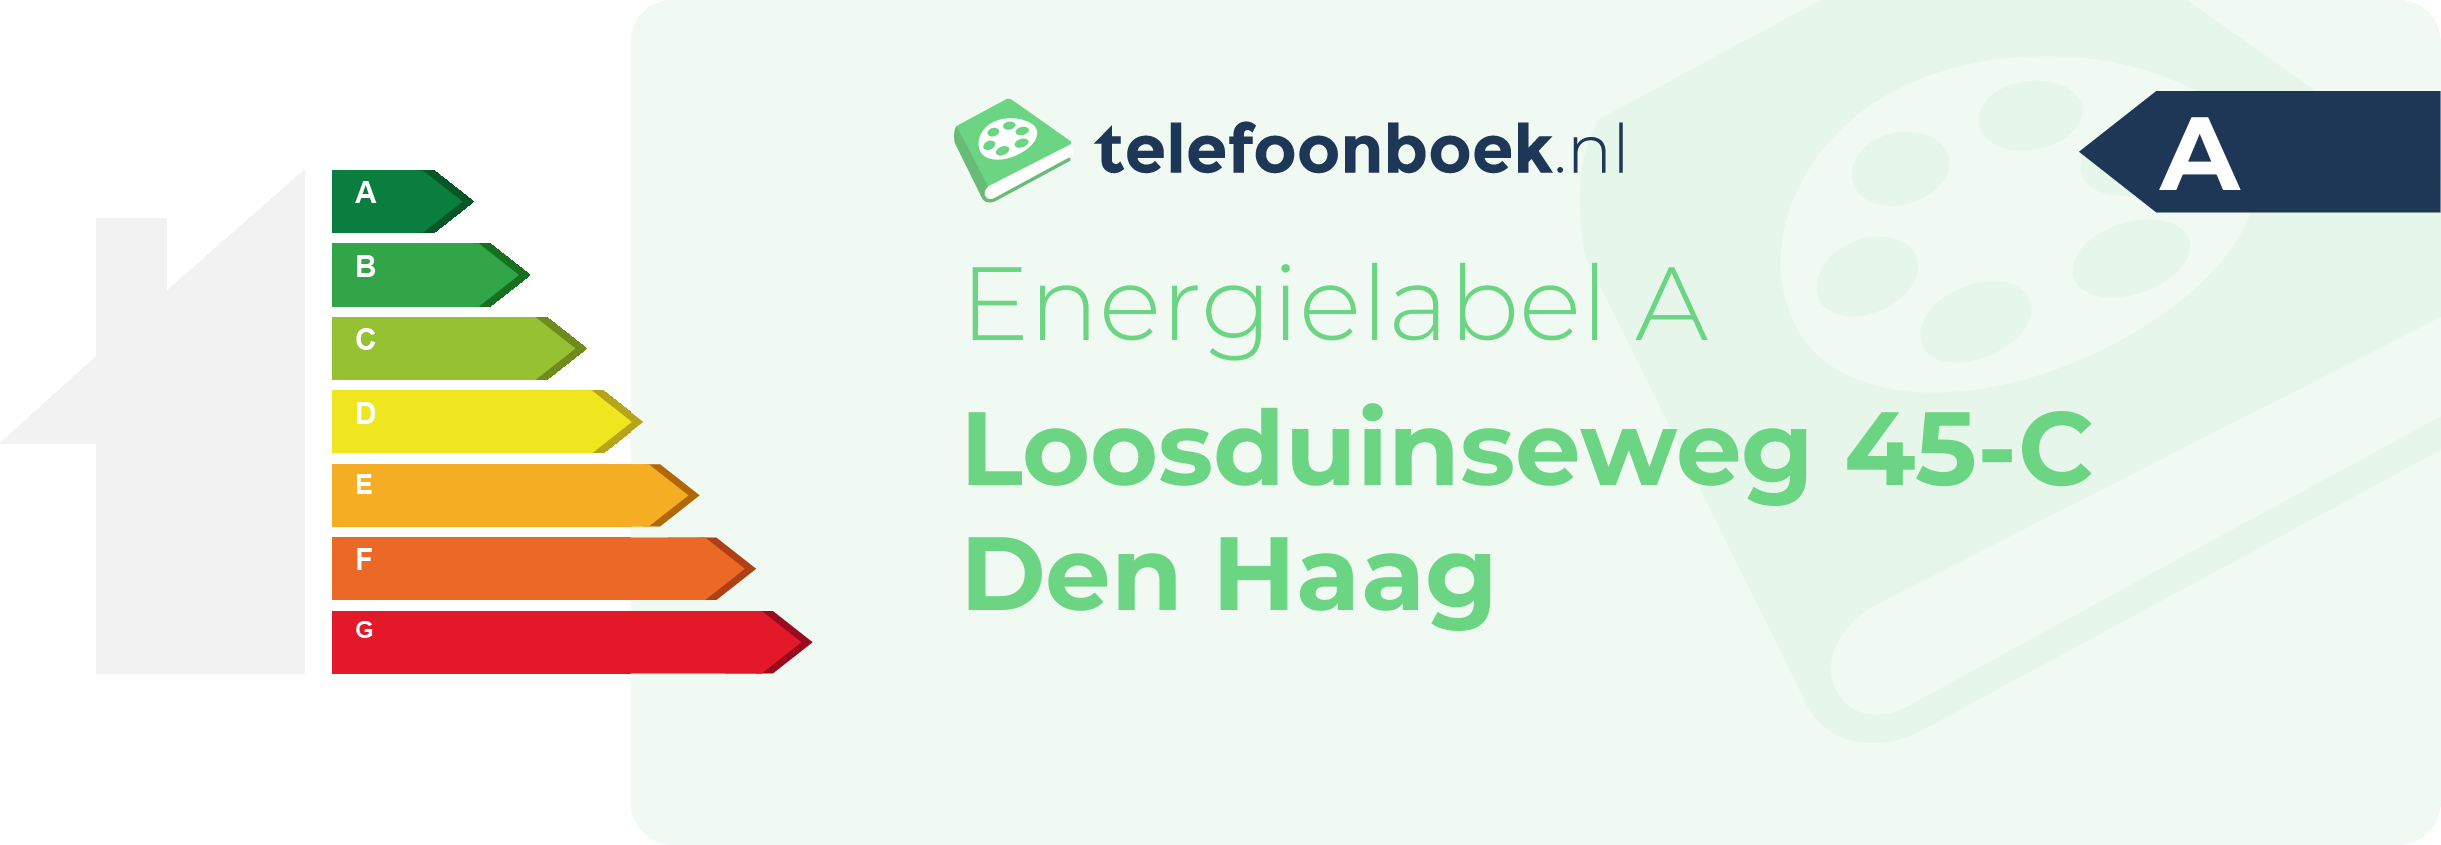 Energielabel Loosduinseweg 45-C Den Haag